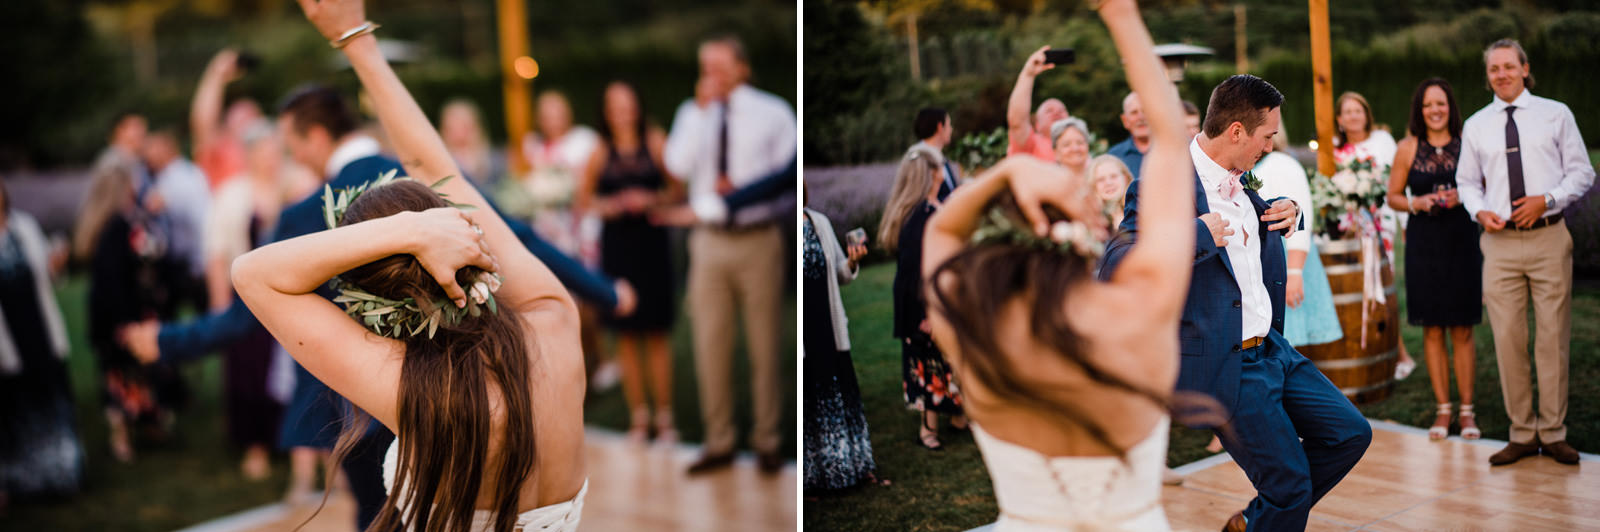 106-woodinville-lavendar-farm-wedding-with-golden-glowy-photos.jpg